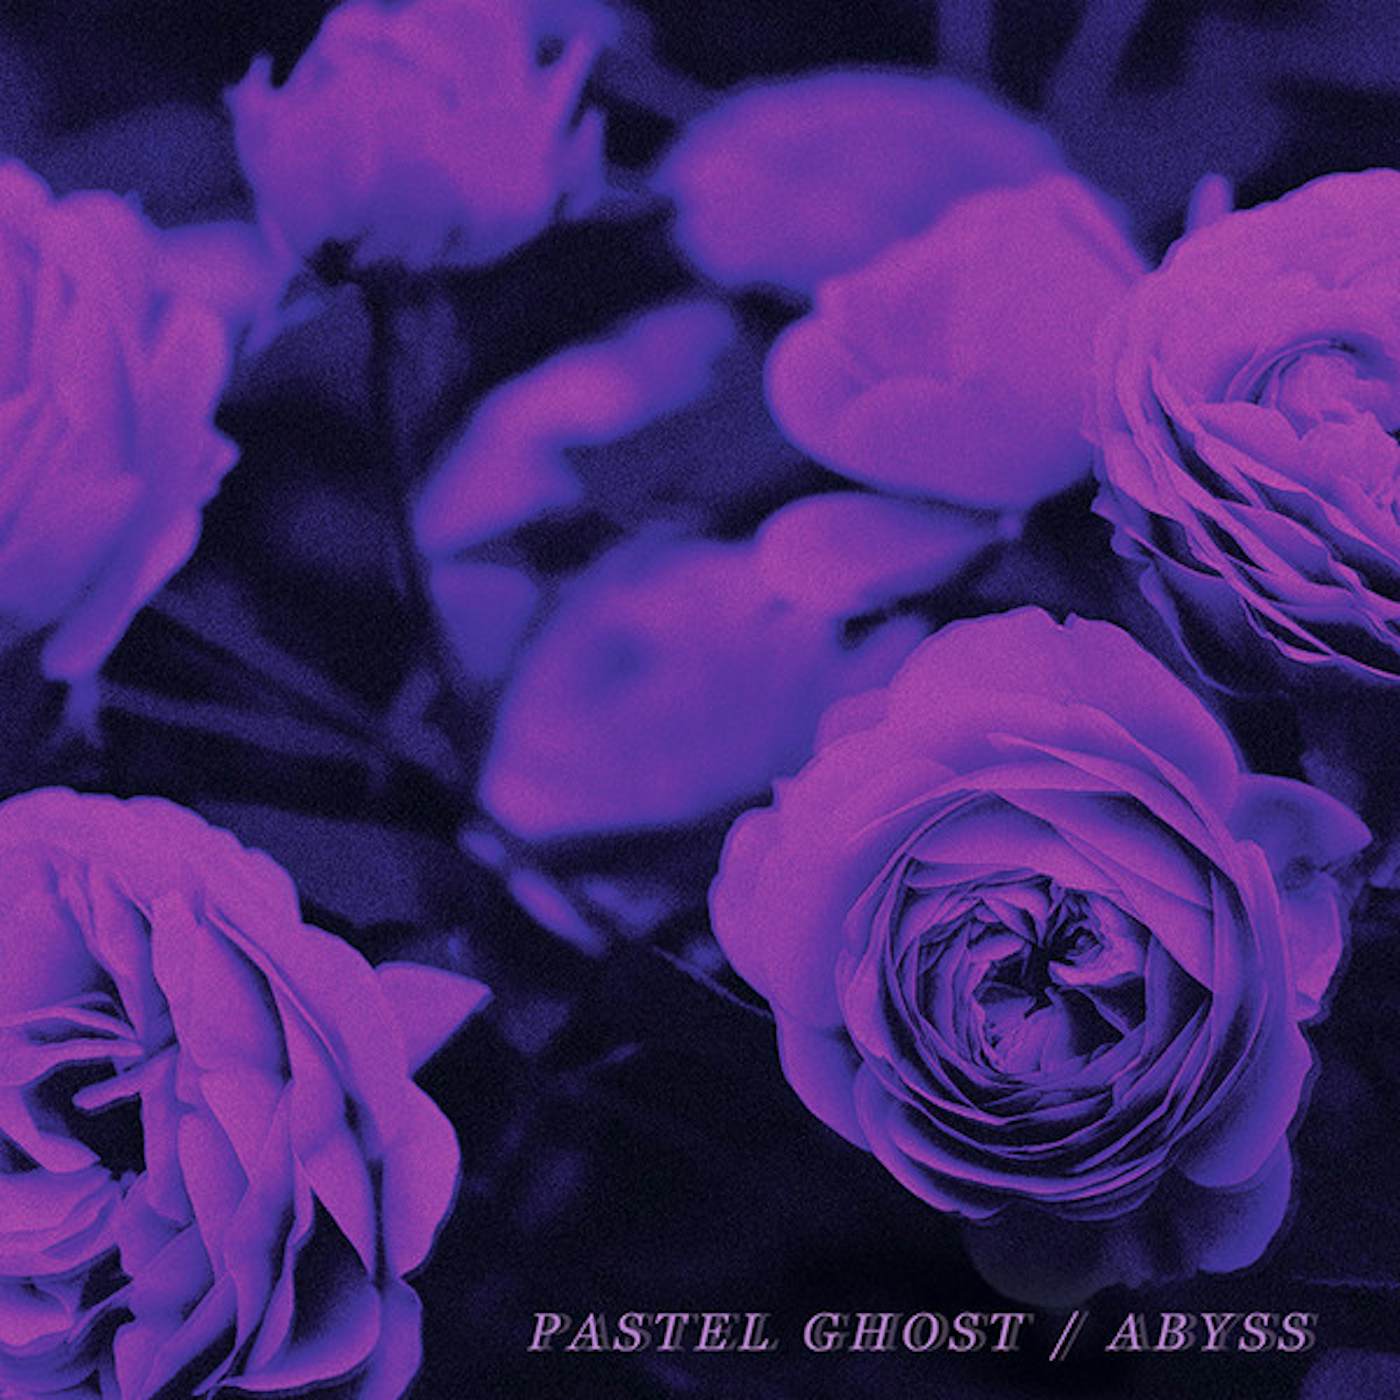 Pastel Ghost Abyss - Purple Vinyl Record